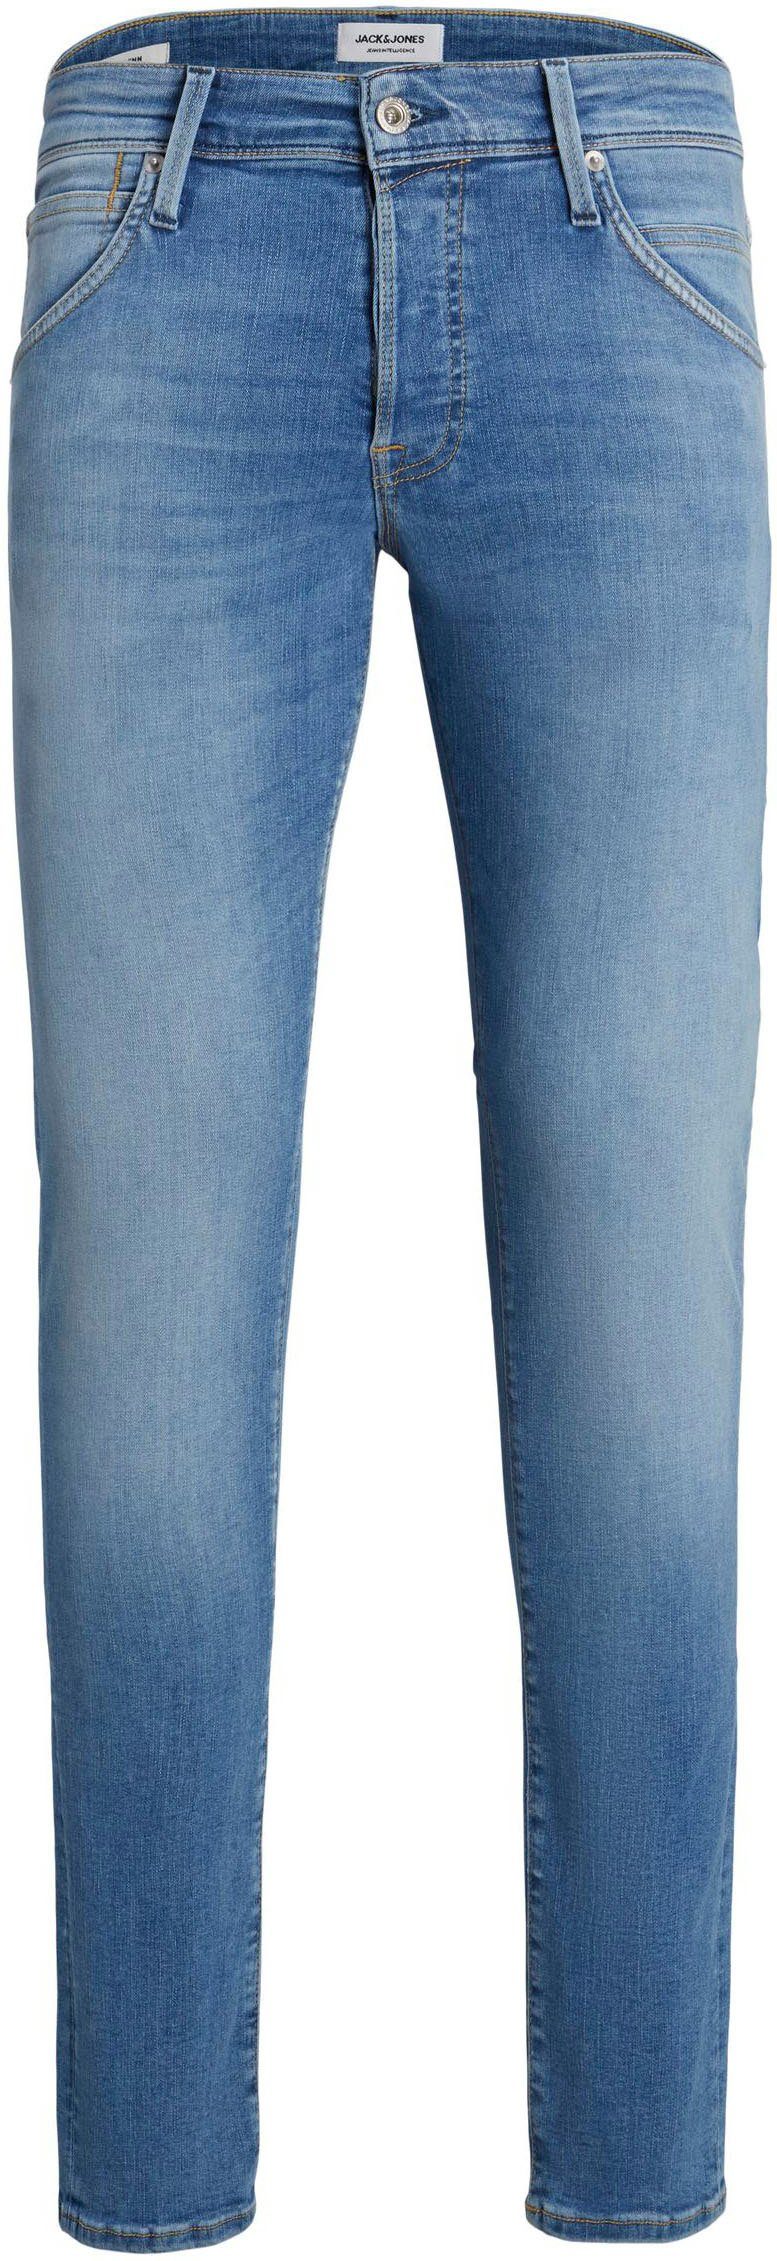 Slim-fit-Jeans JJIGLENN JOS & JJFOX Jack Jones den blue 50SPS 047